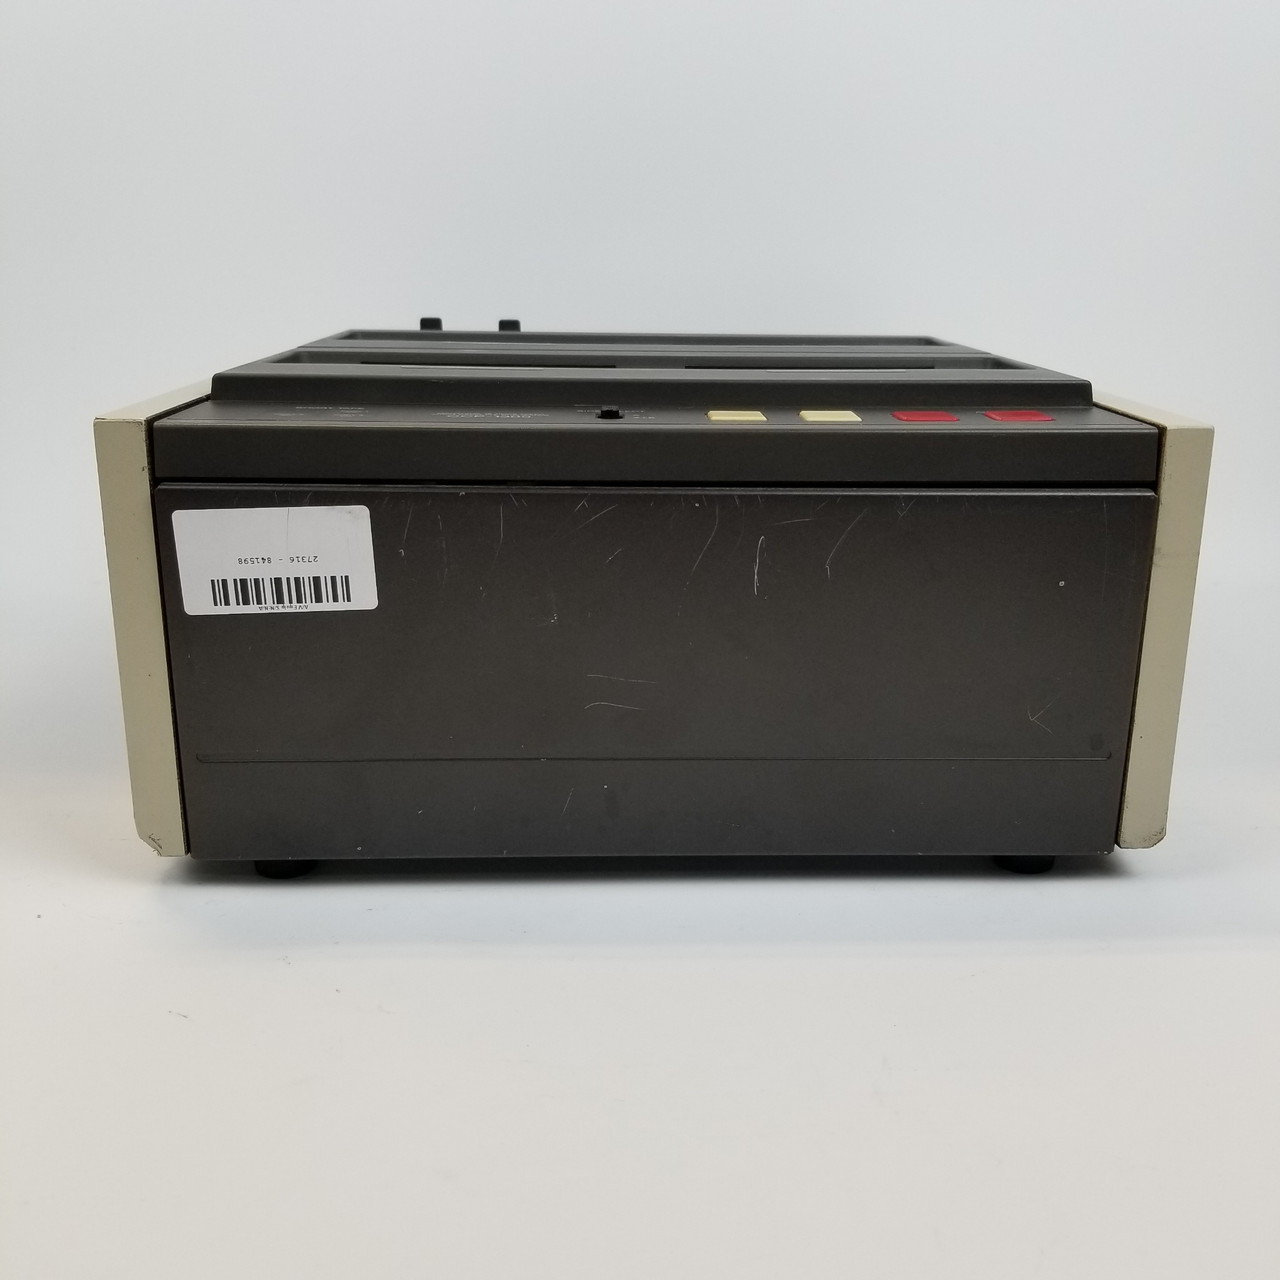 Sony CCP-1300 Mono Cassette Duplicator | Grade C